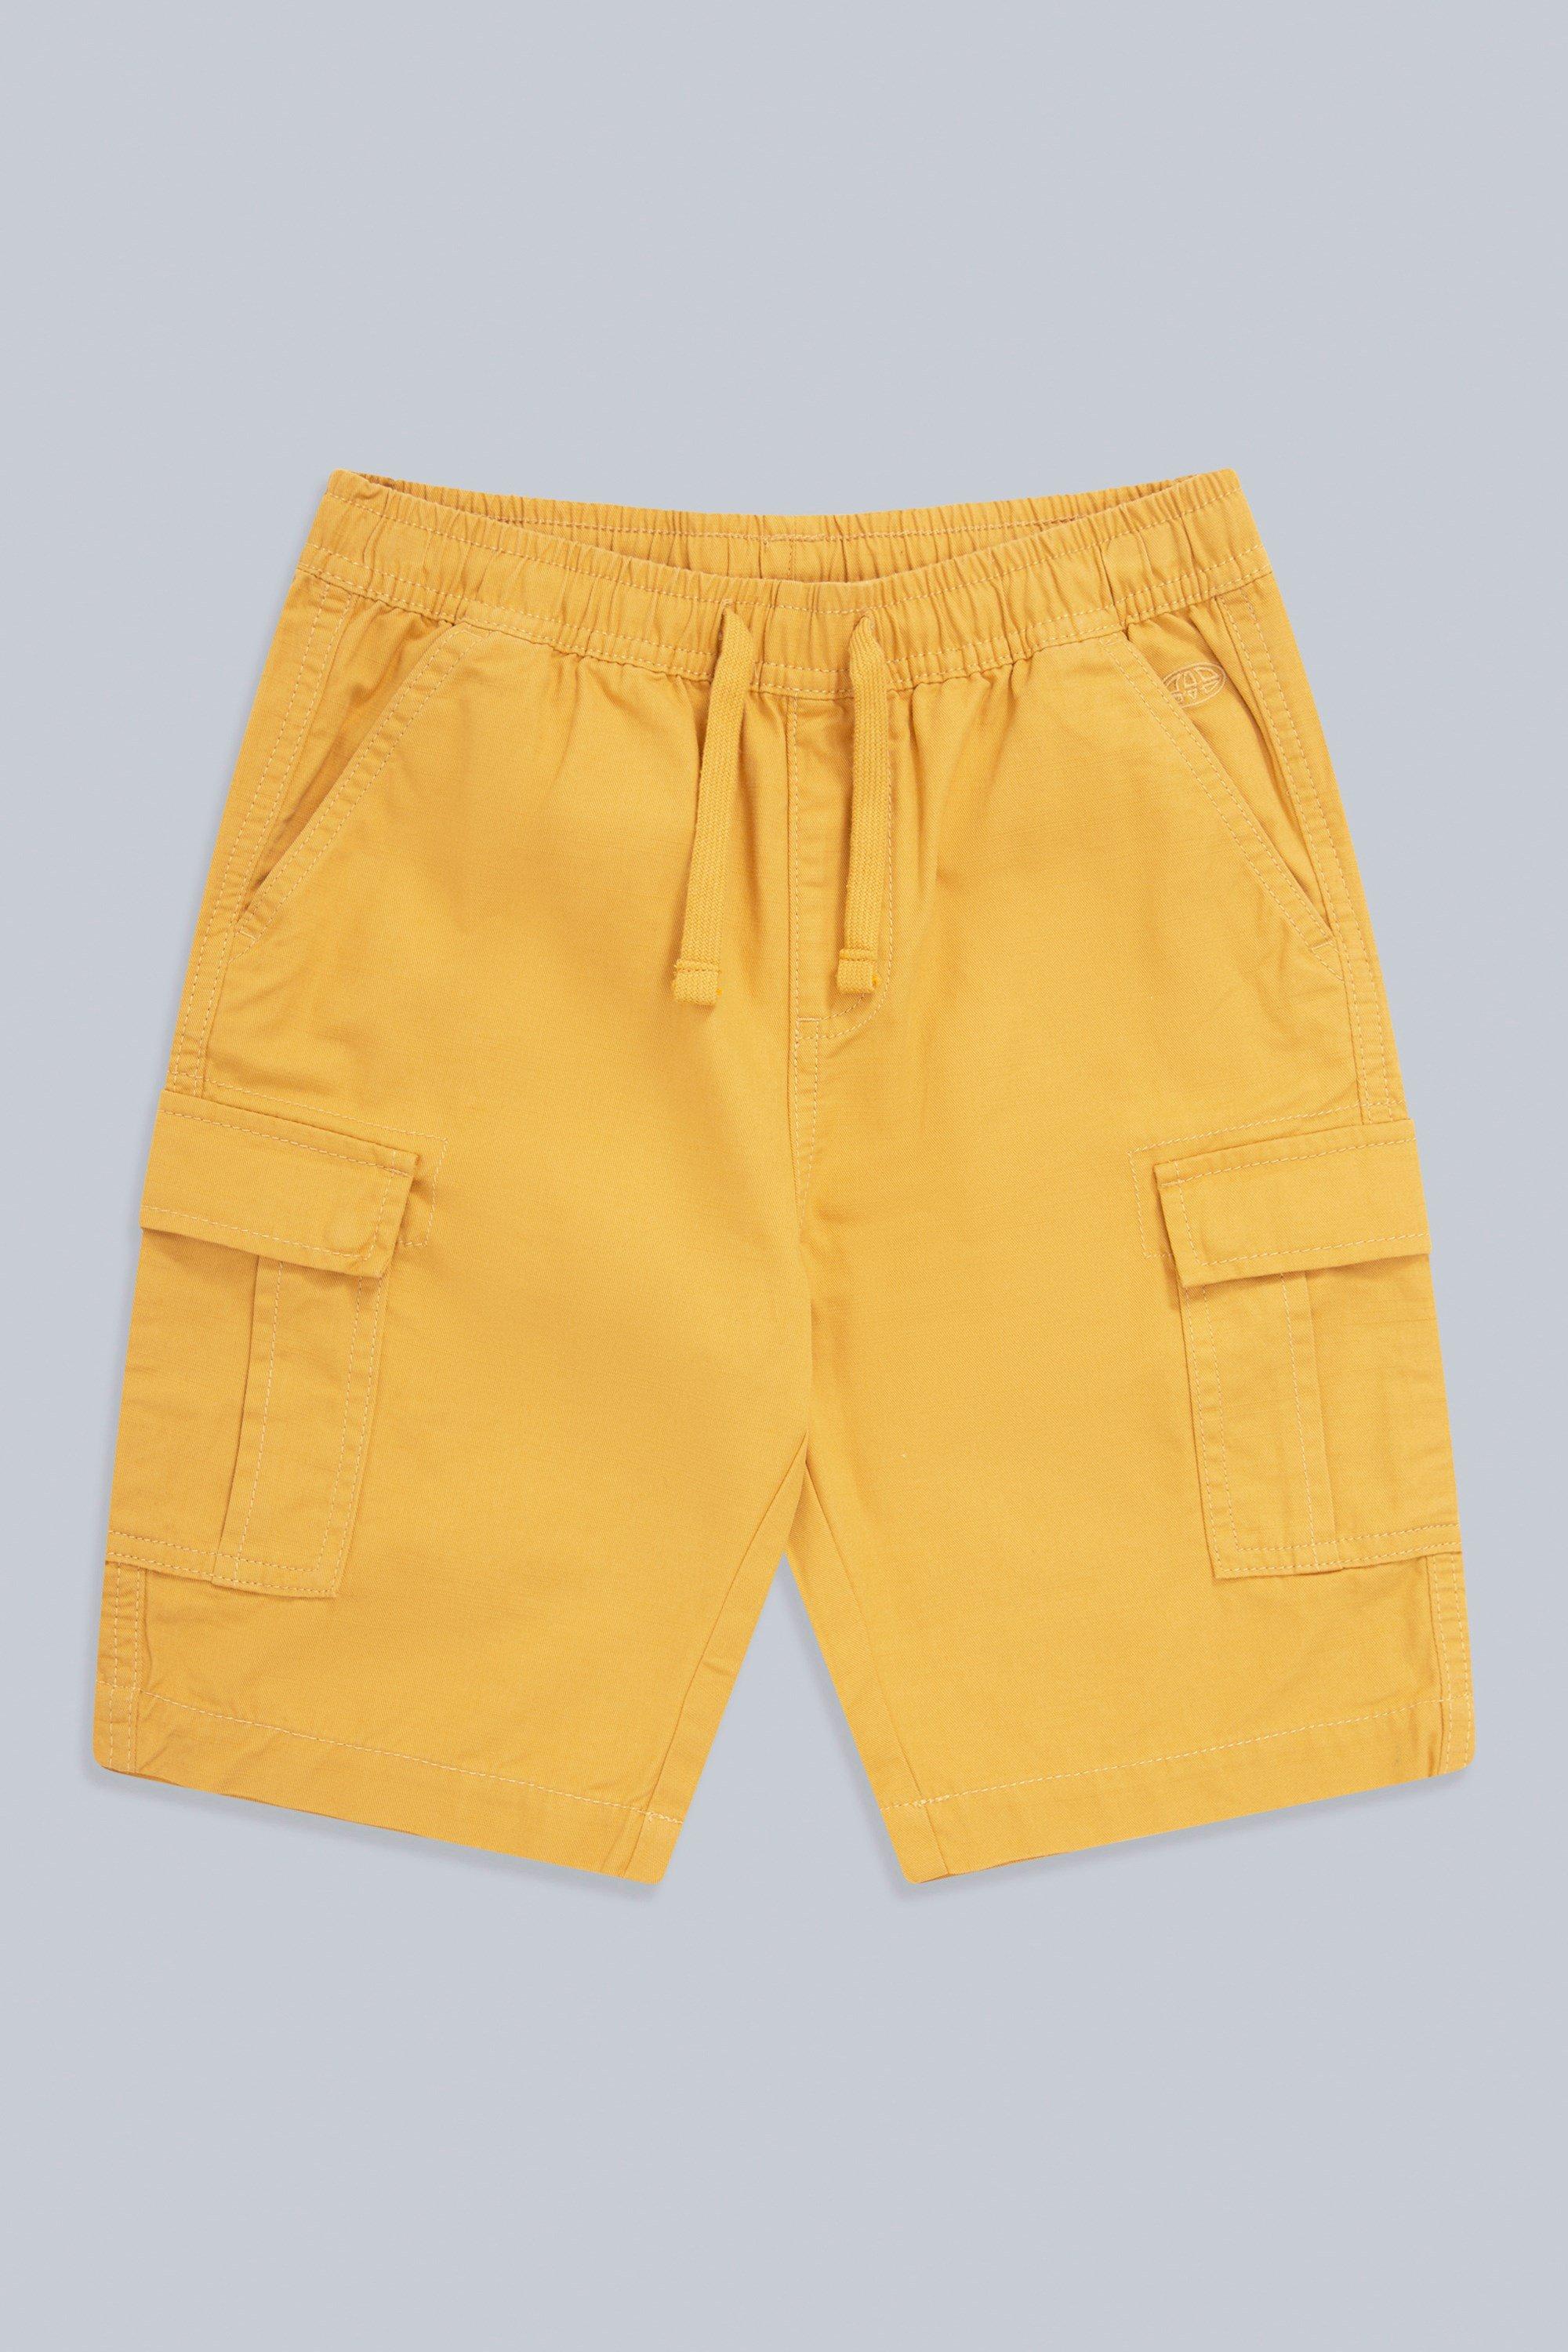 Rowan  Cargo Shorts  Casual Summer Organic Cotton Short Pants